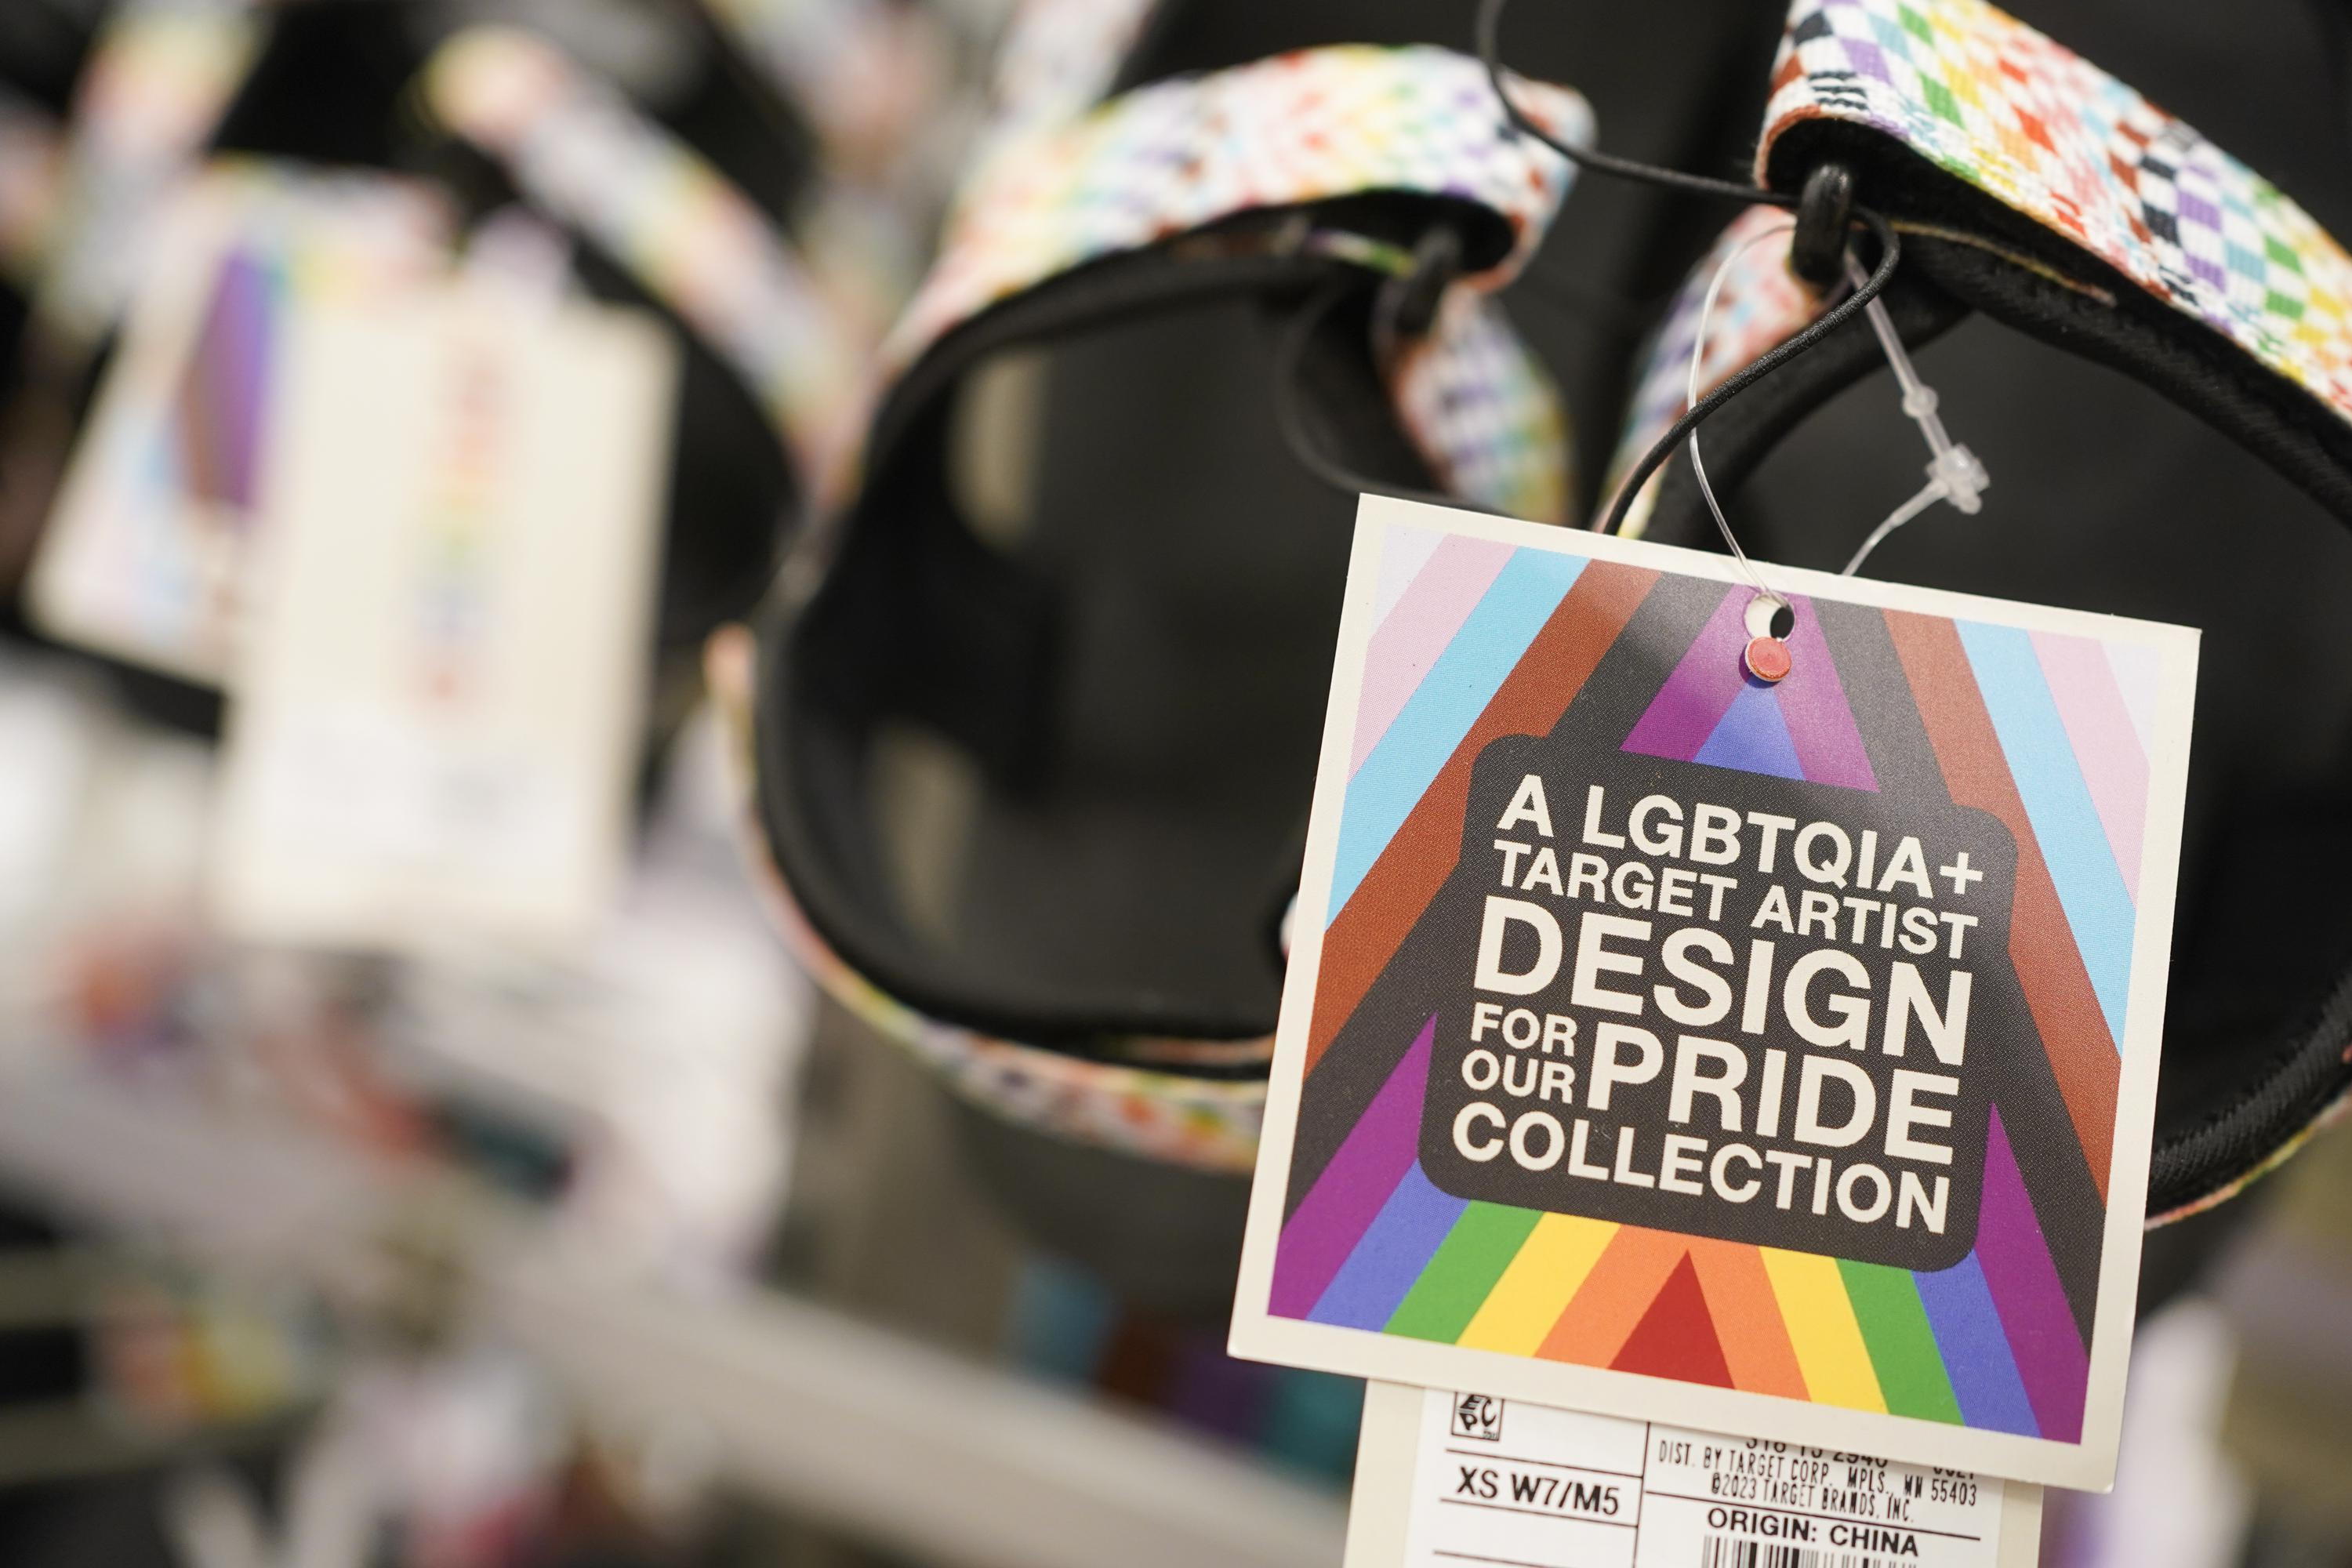 UK designer's satanic apparel not part of Target's Pride